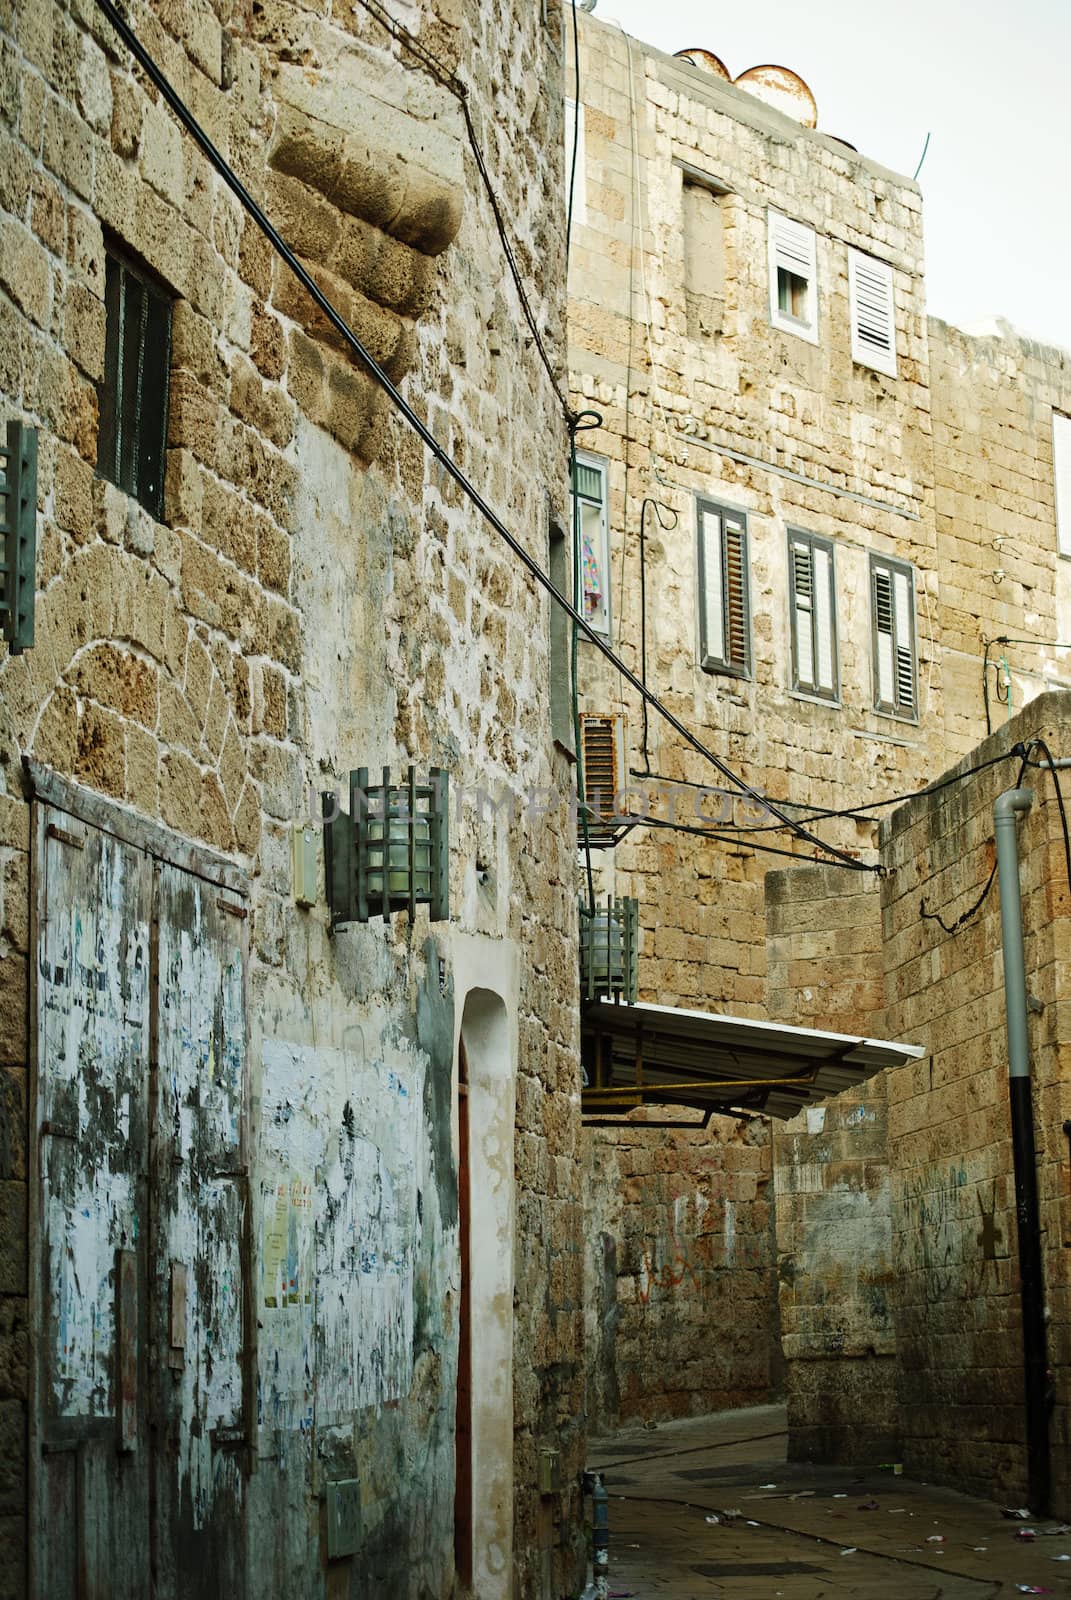 Akko (Acre), Israel by sarkao